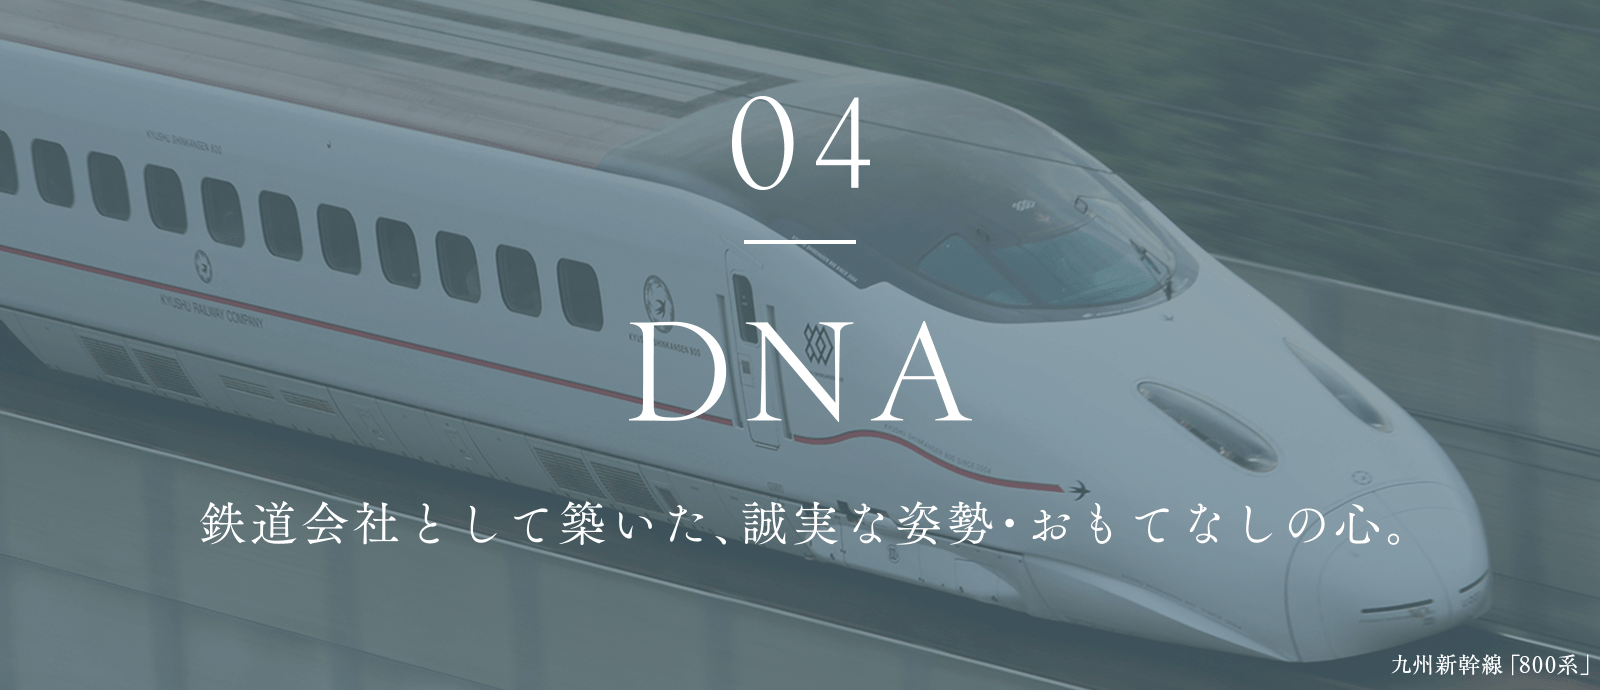 04 DNA